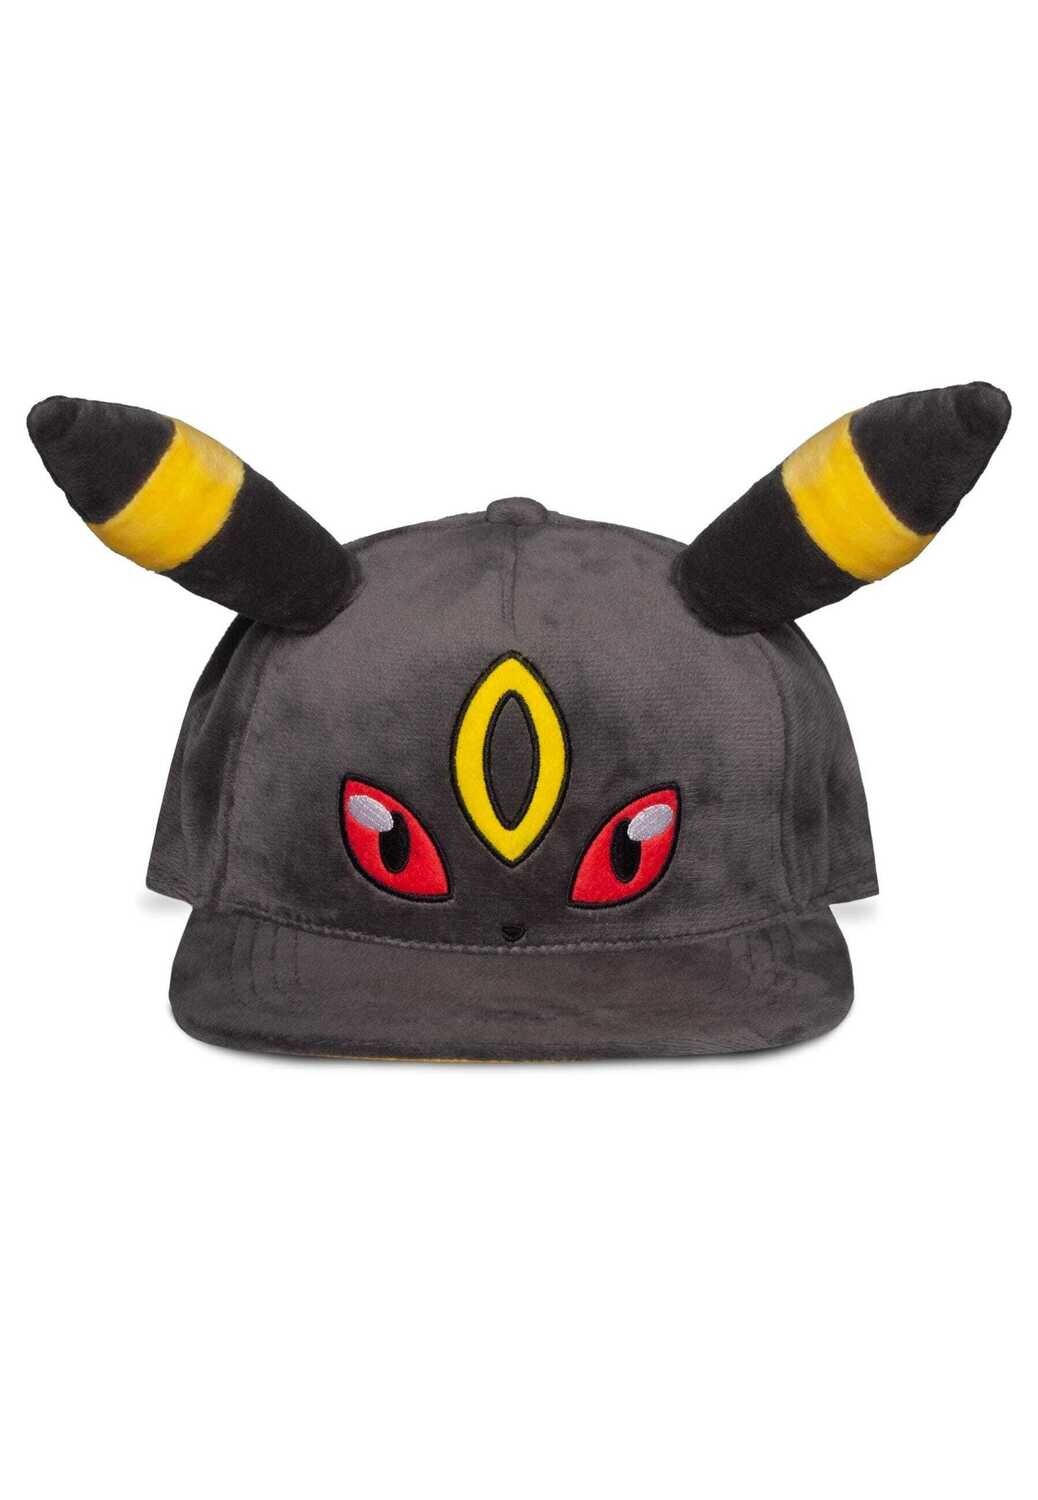 Pokémon - Umbreon Plush Snapback